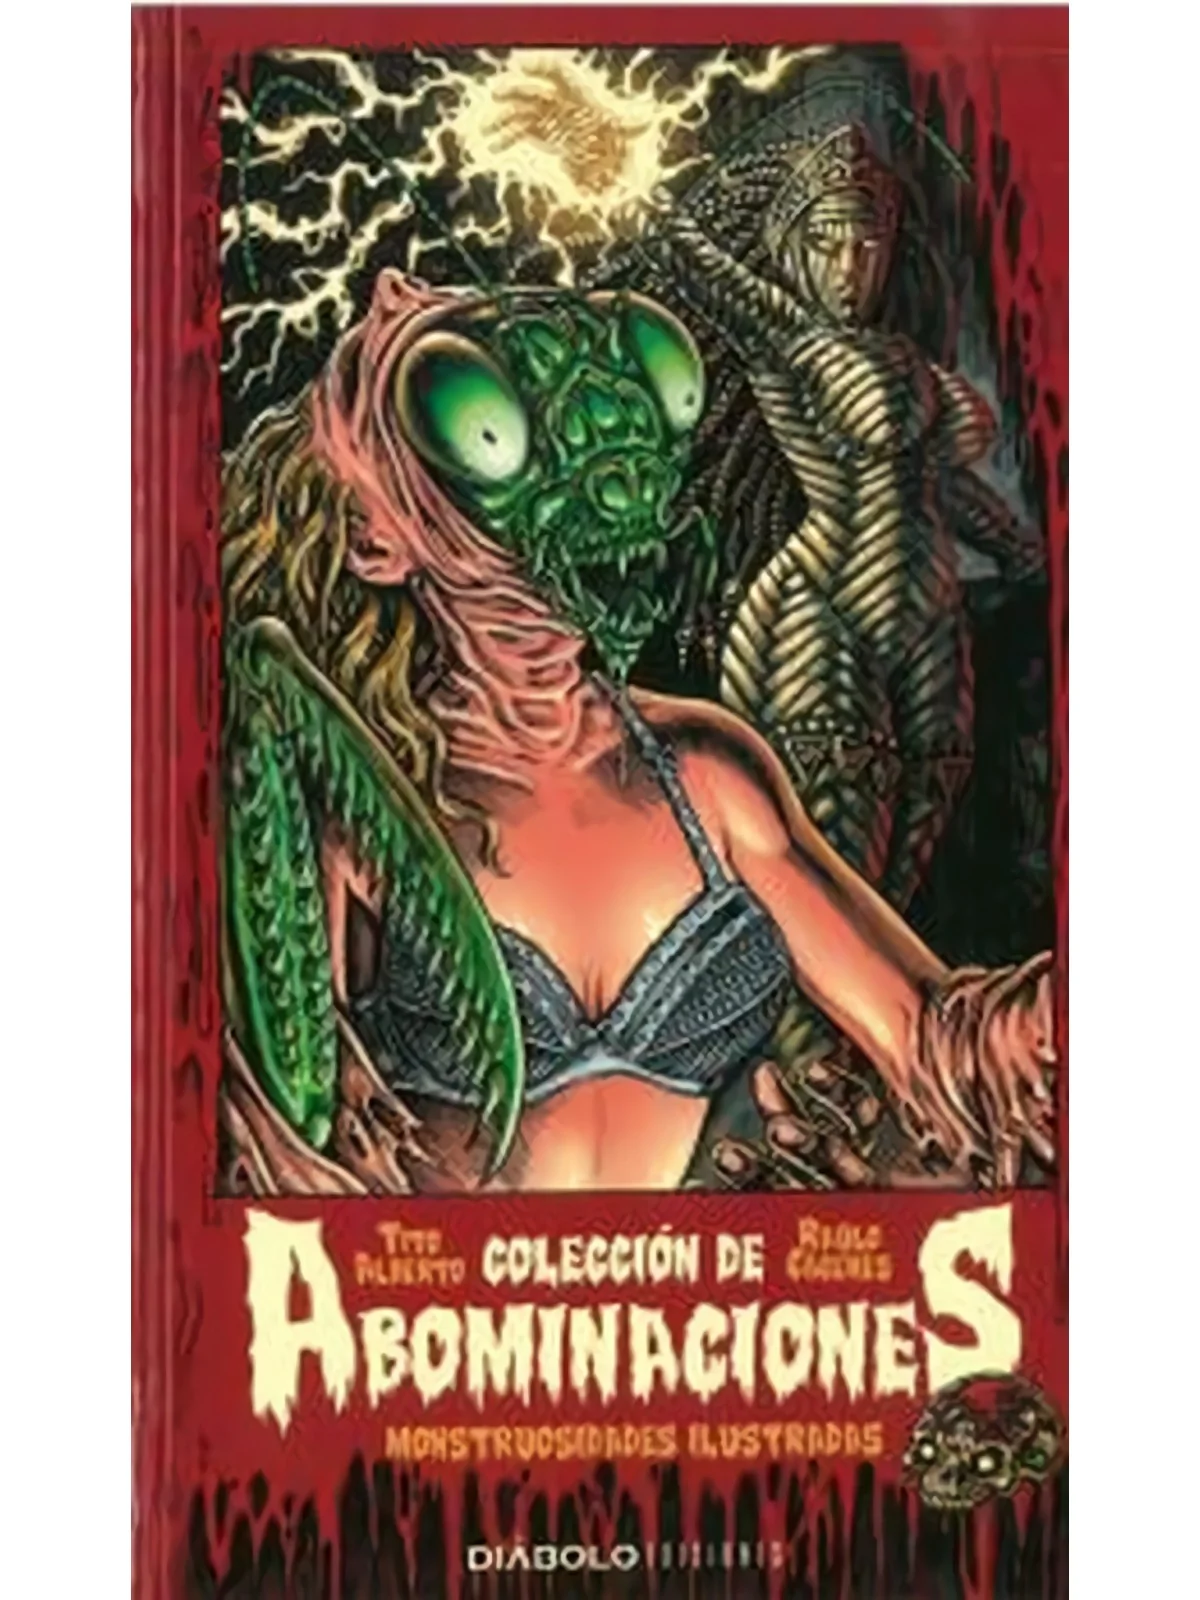 Comprar Coleccion de Abominaciones Monstruosidades Ilustradas barato a